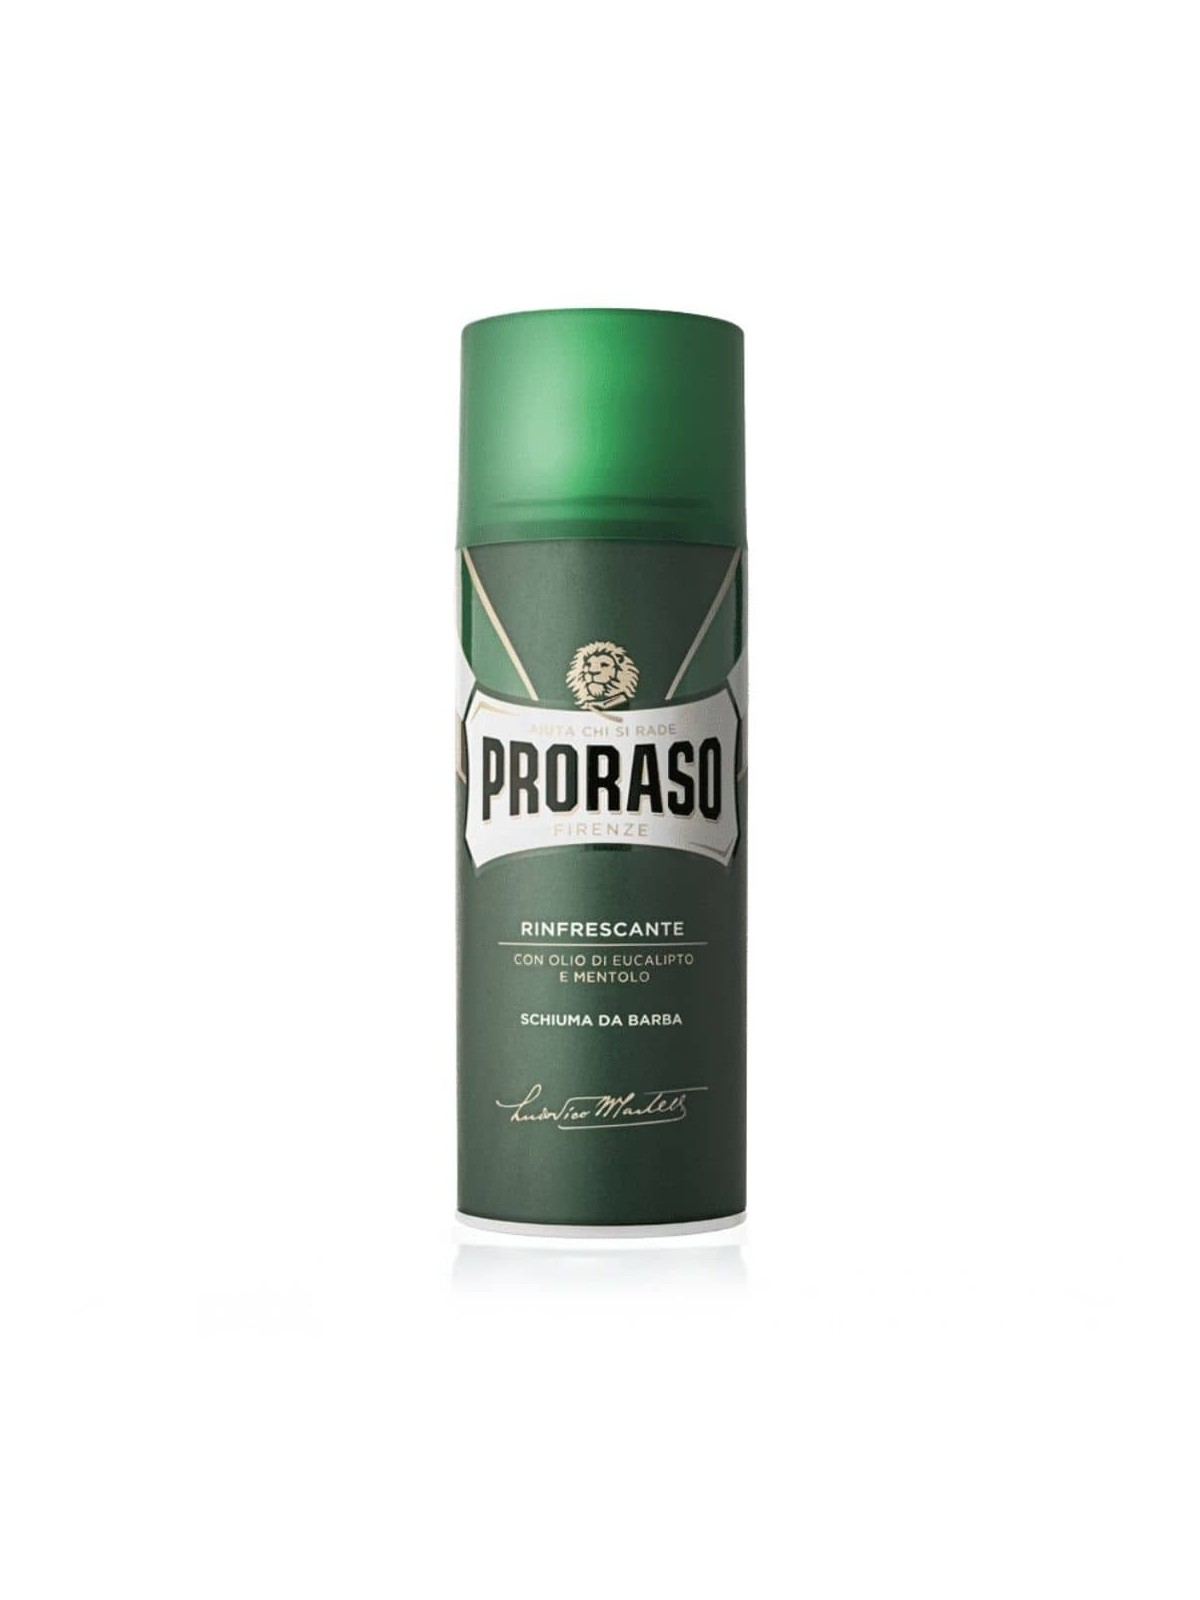 Proraso Refreshing Shaving Foam